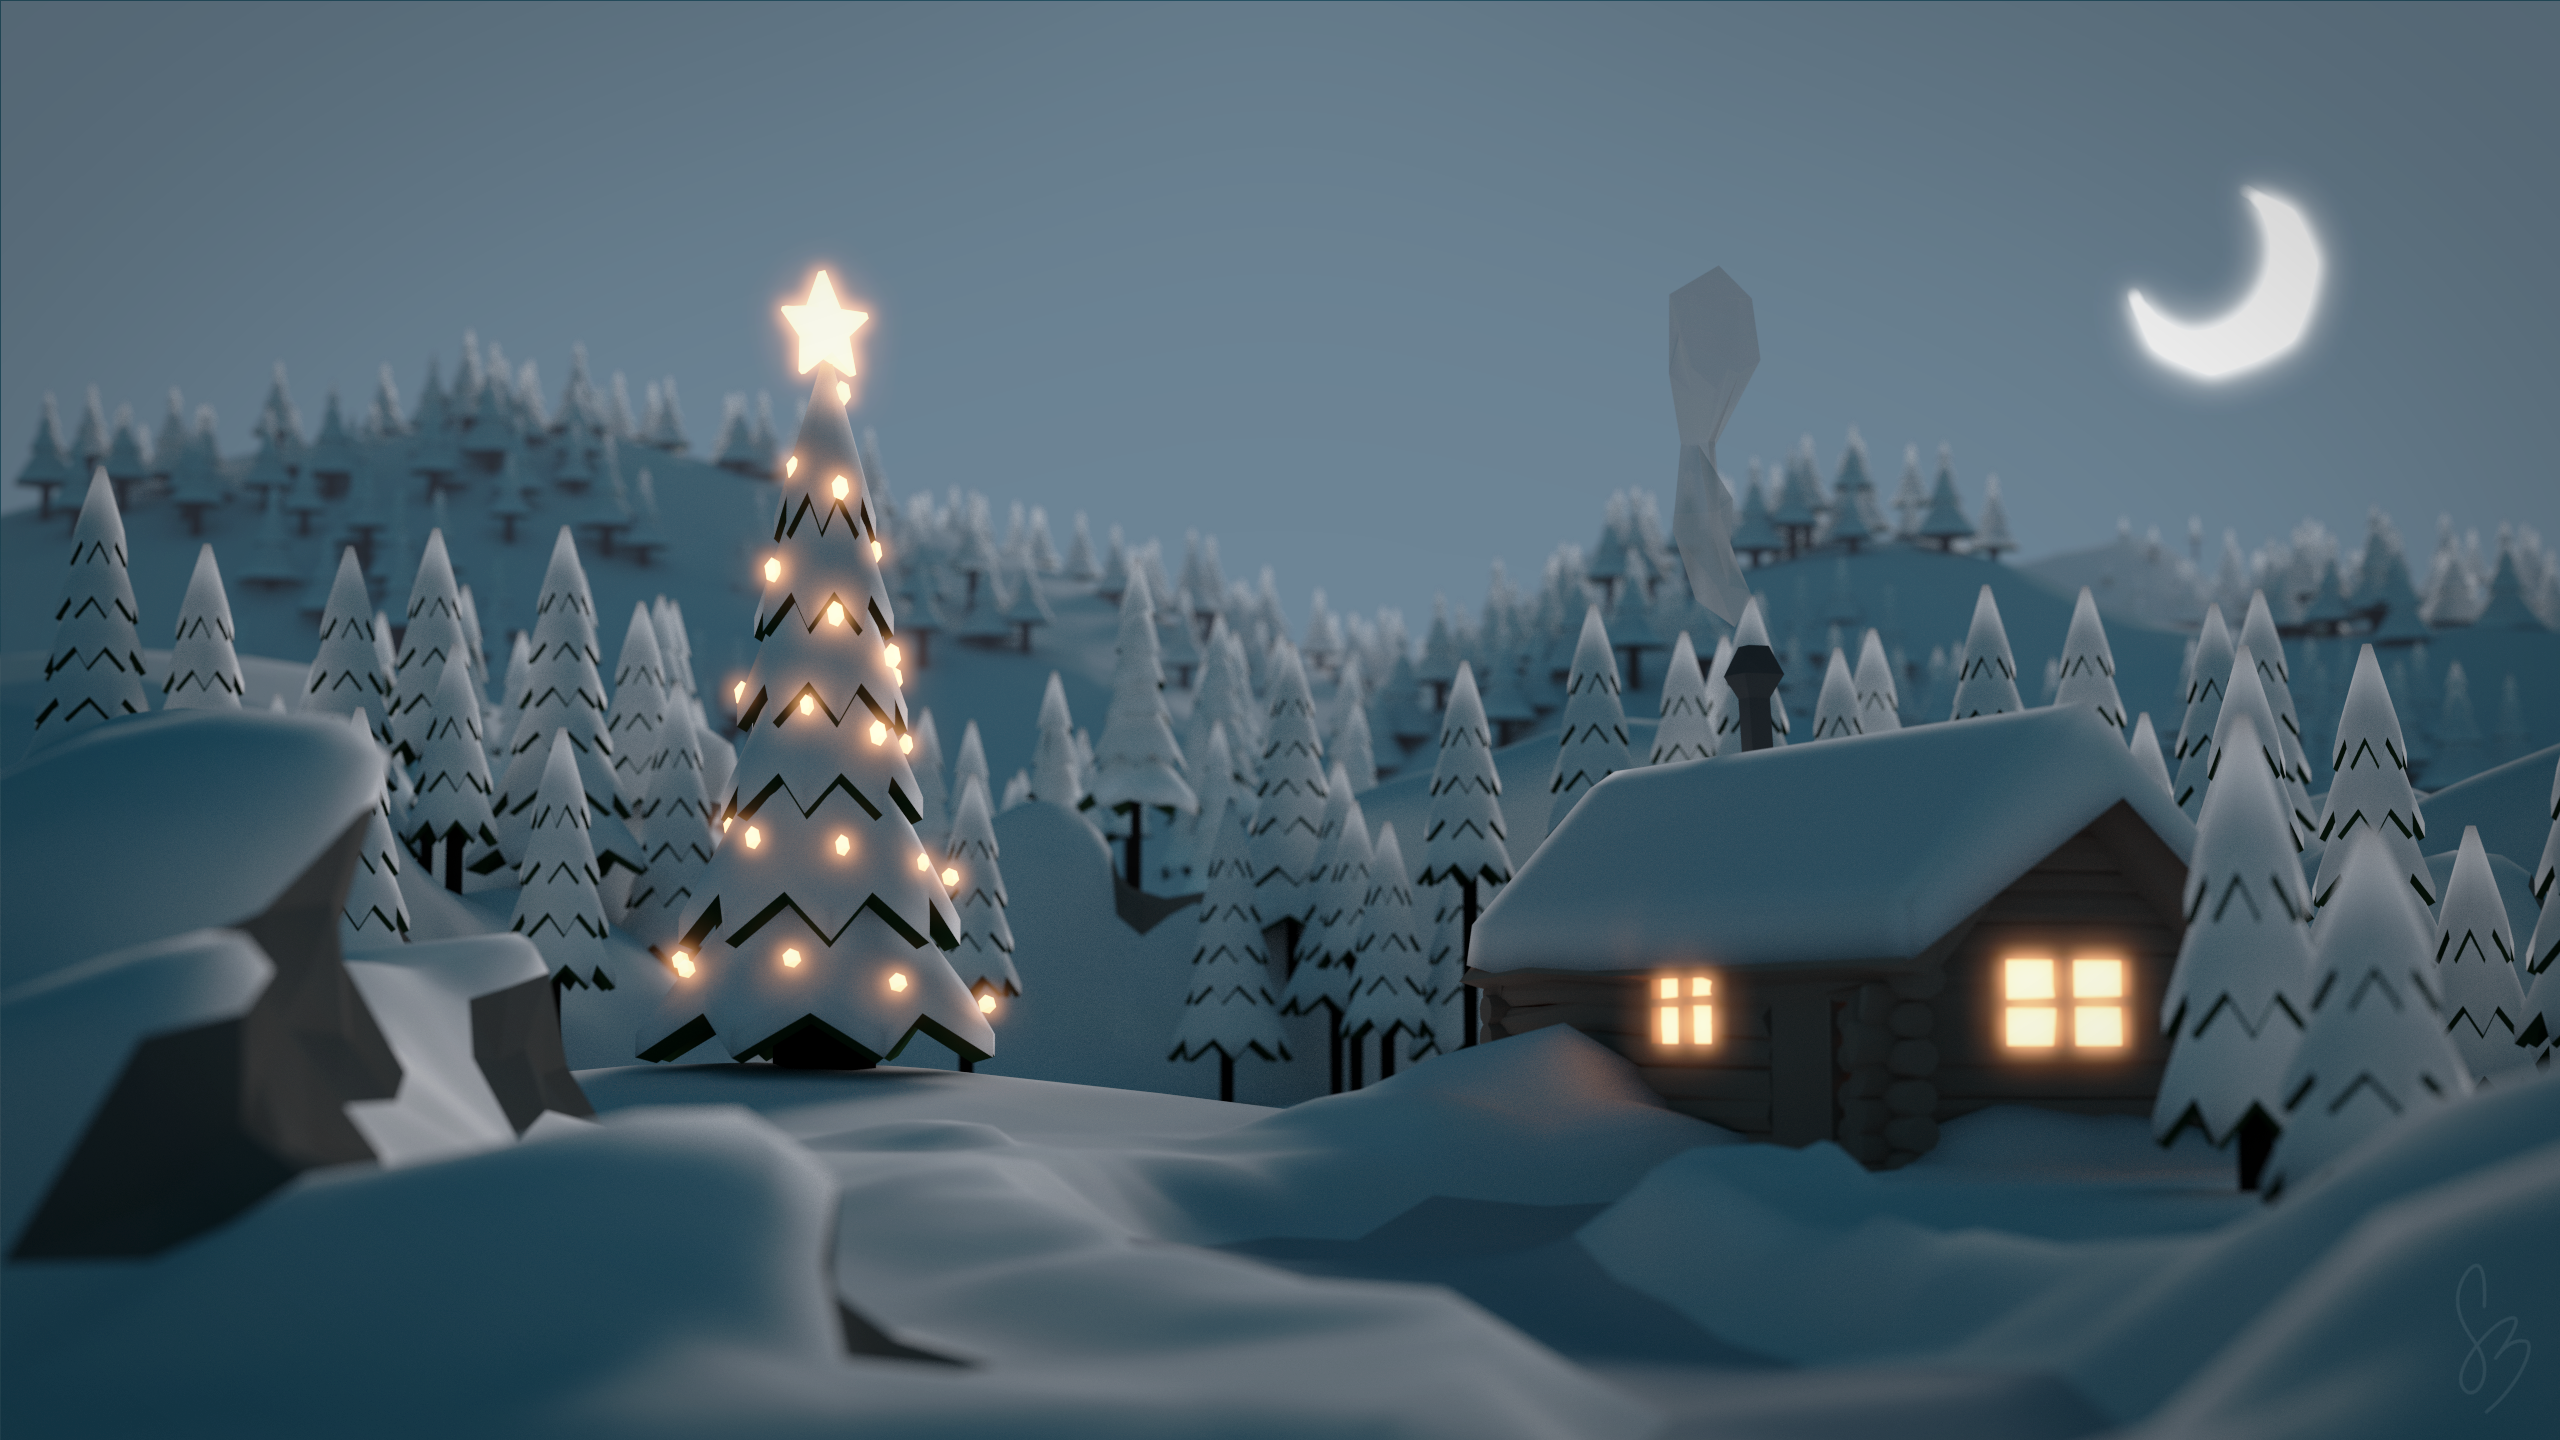 General 2560x1440 winter snow digital art hut Moon Christmas trees crescent moon Christmas tree night